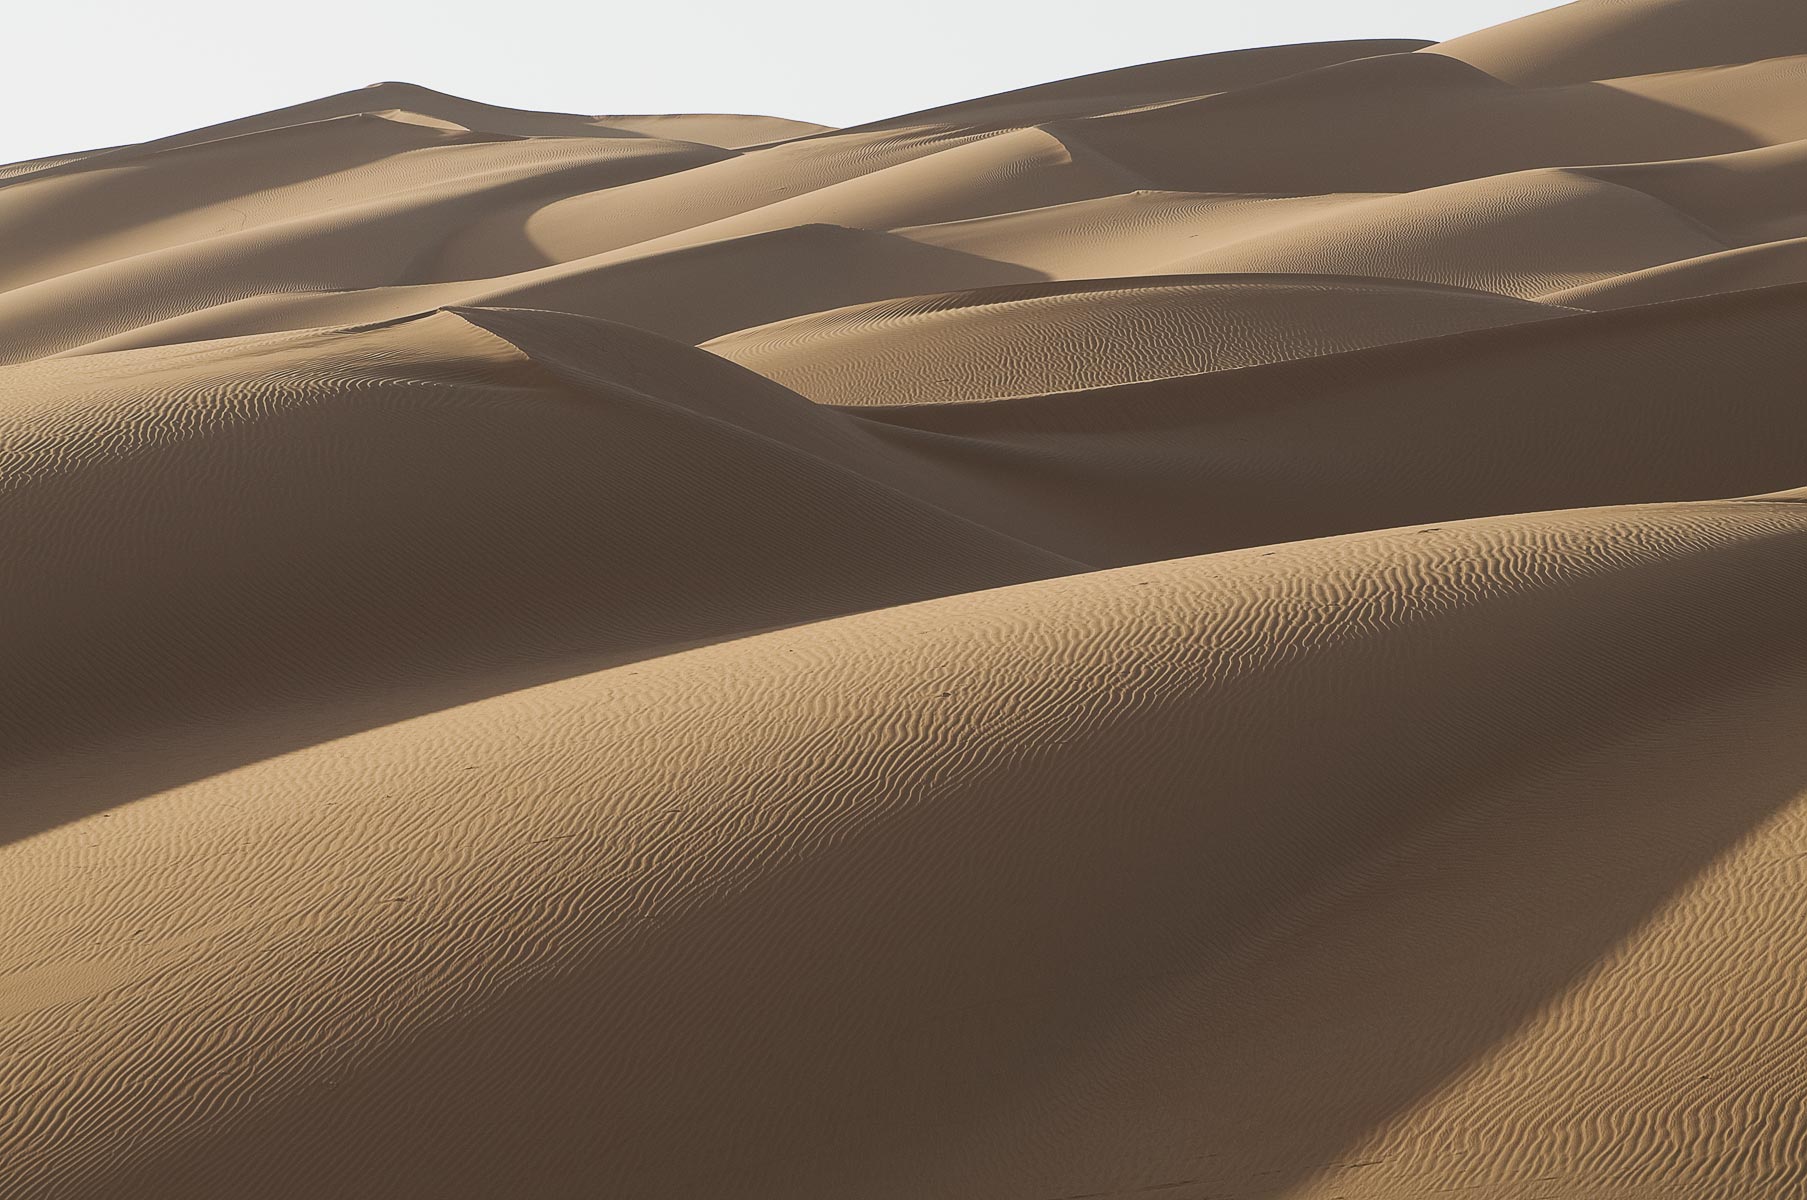 7-Saudi-Arabia-Empty-Quarter-Dunes-1111 | Bobbi Lane Photography